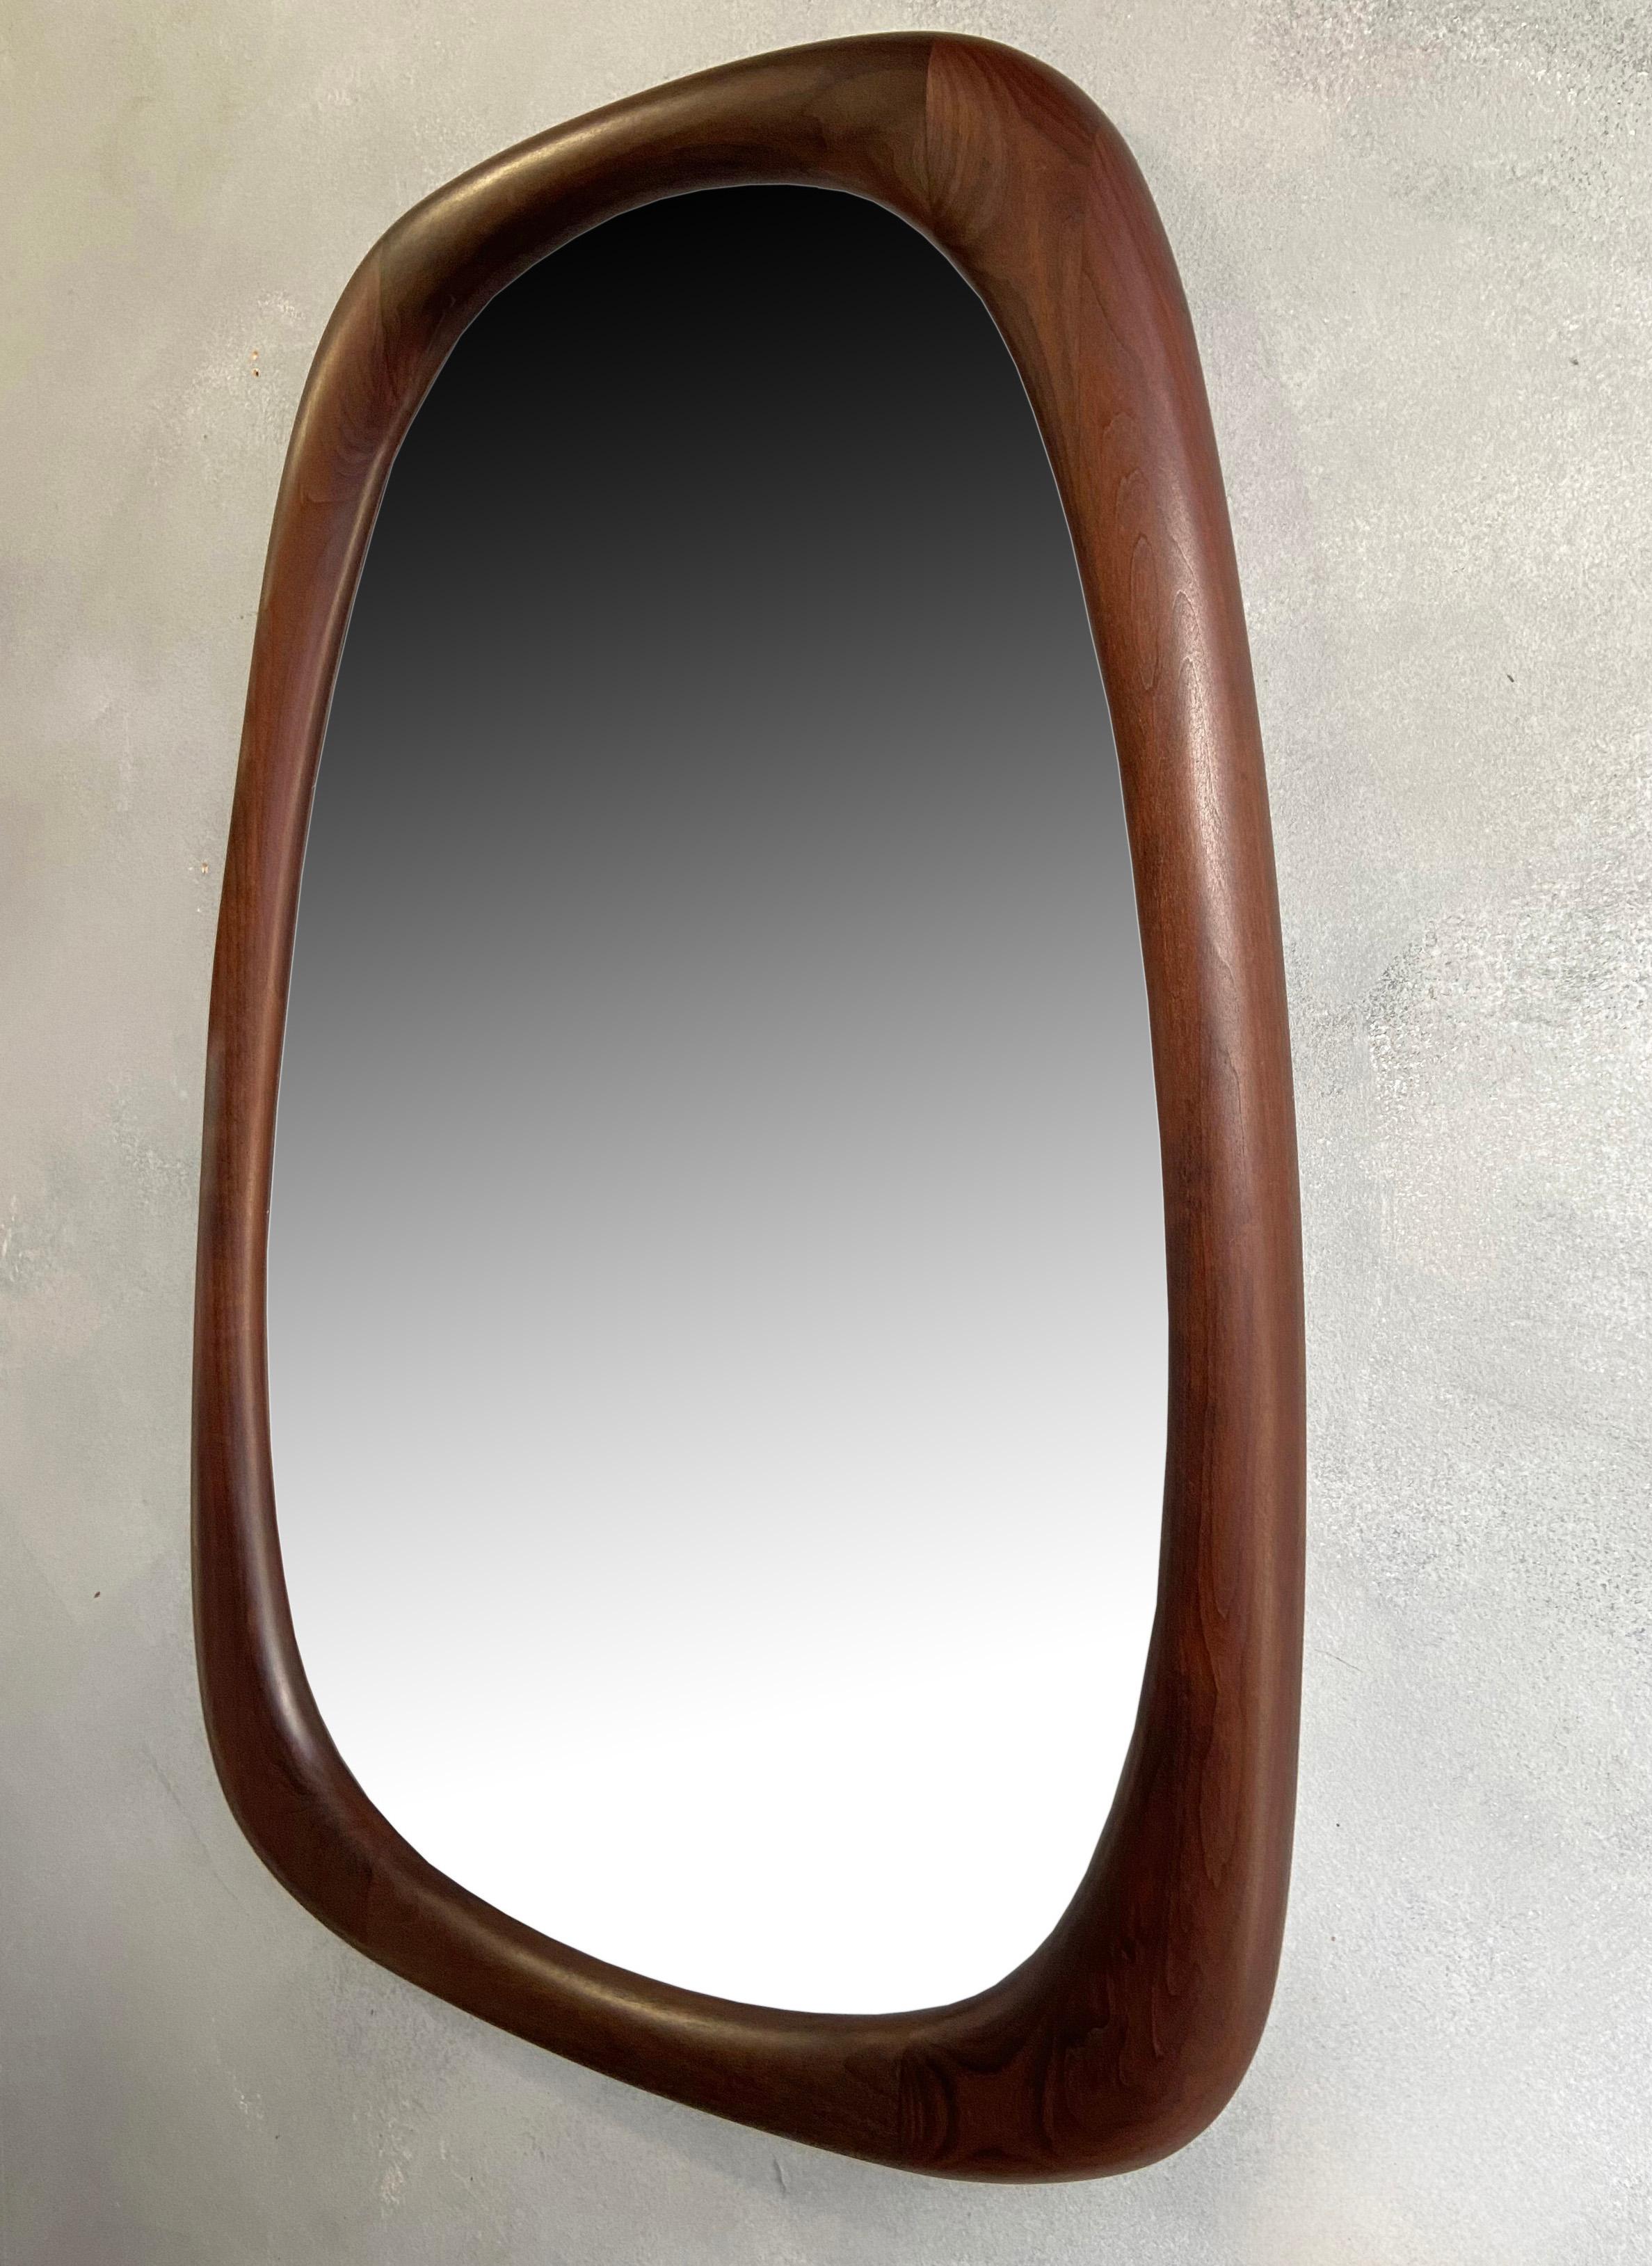 Stunning Mid-Century American Modern Craft Mirror by Dean Santner For Sale 3